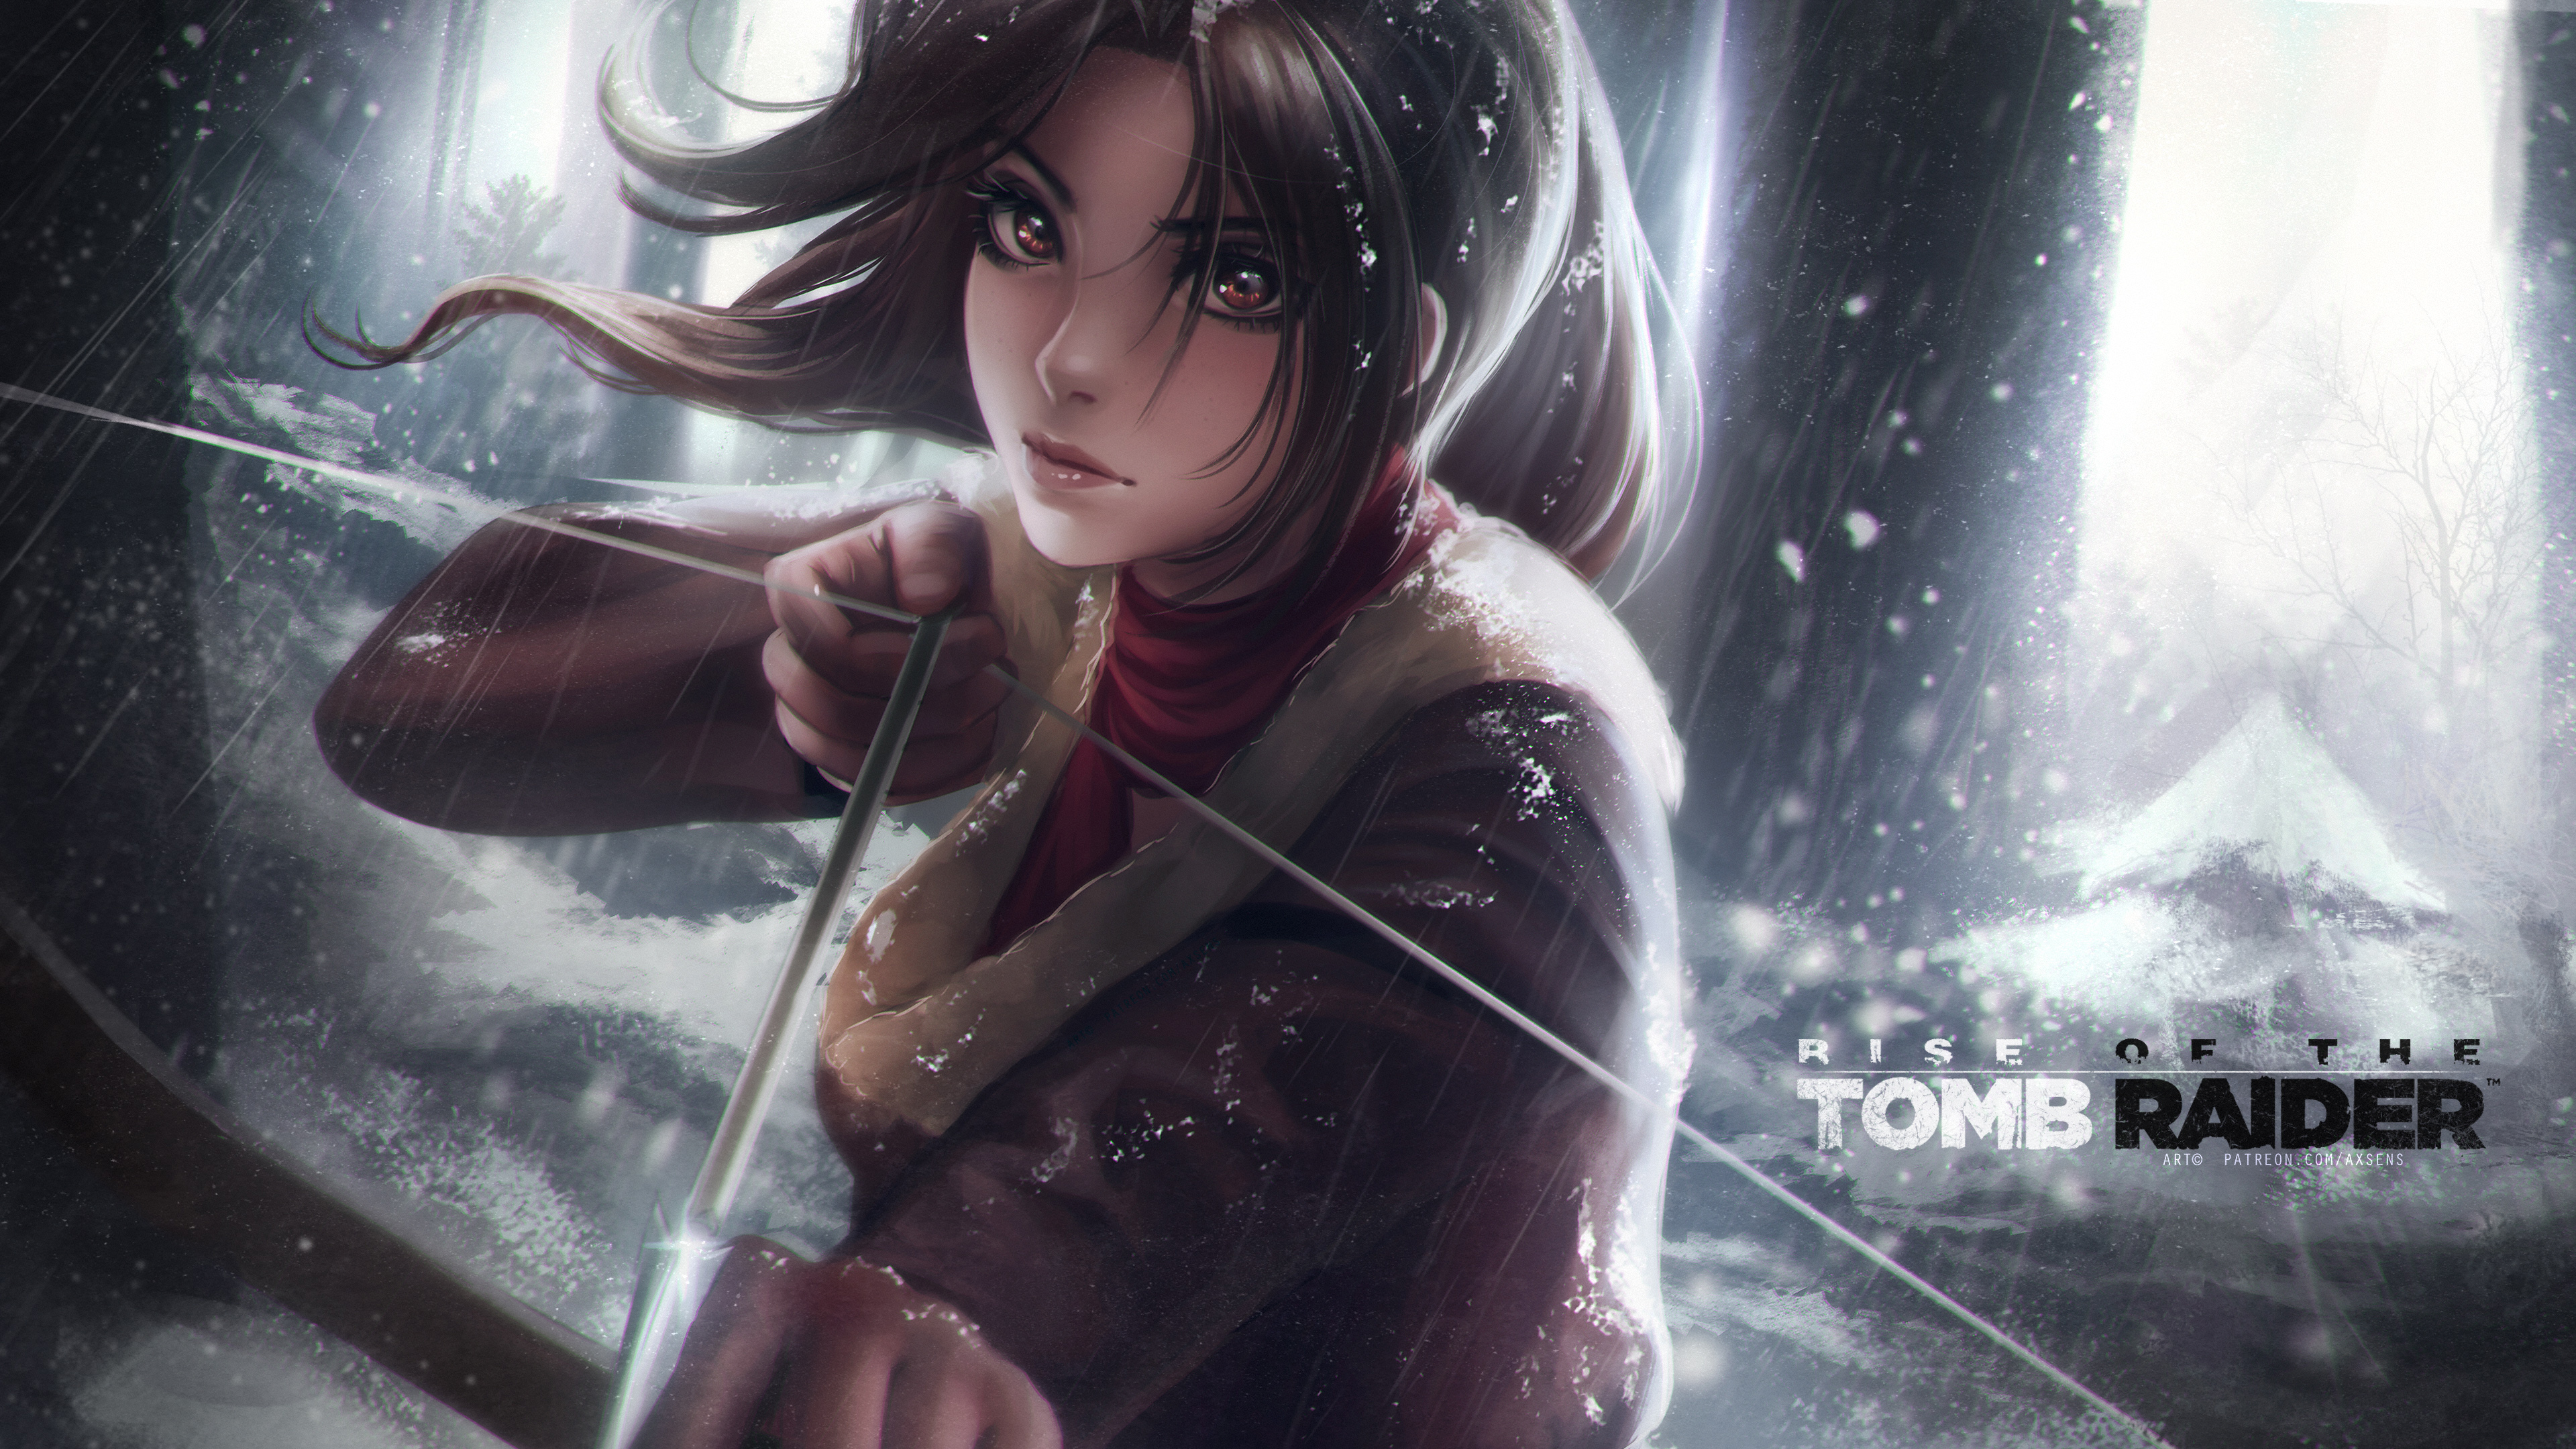 Axsens Women Lara Croft Tomb Raider Tomb Raider Bow Bow And Arrow Video Game Characters 3840x2160